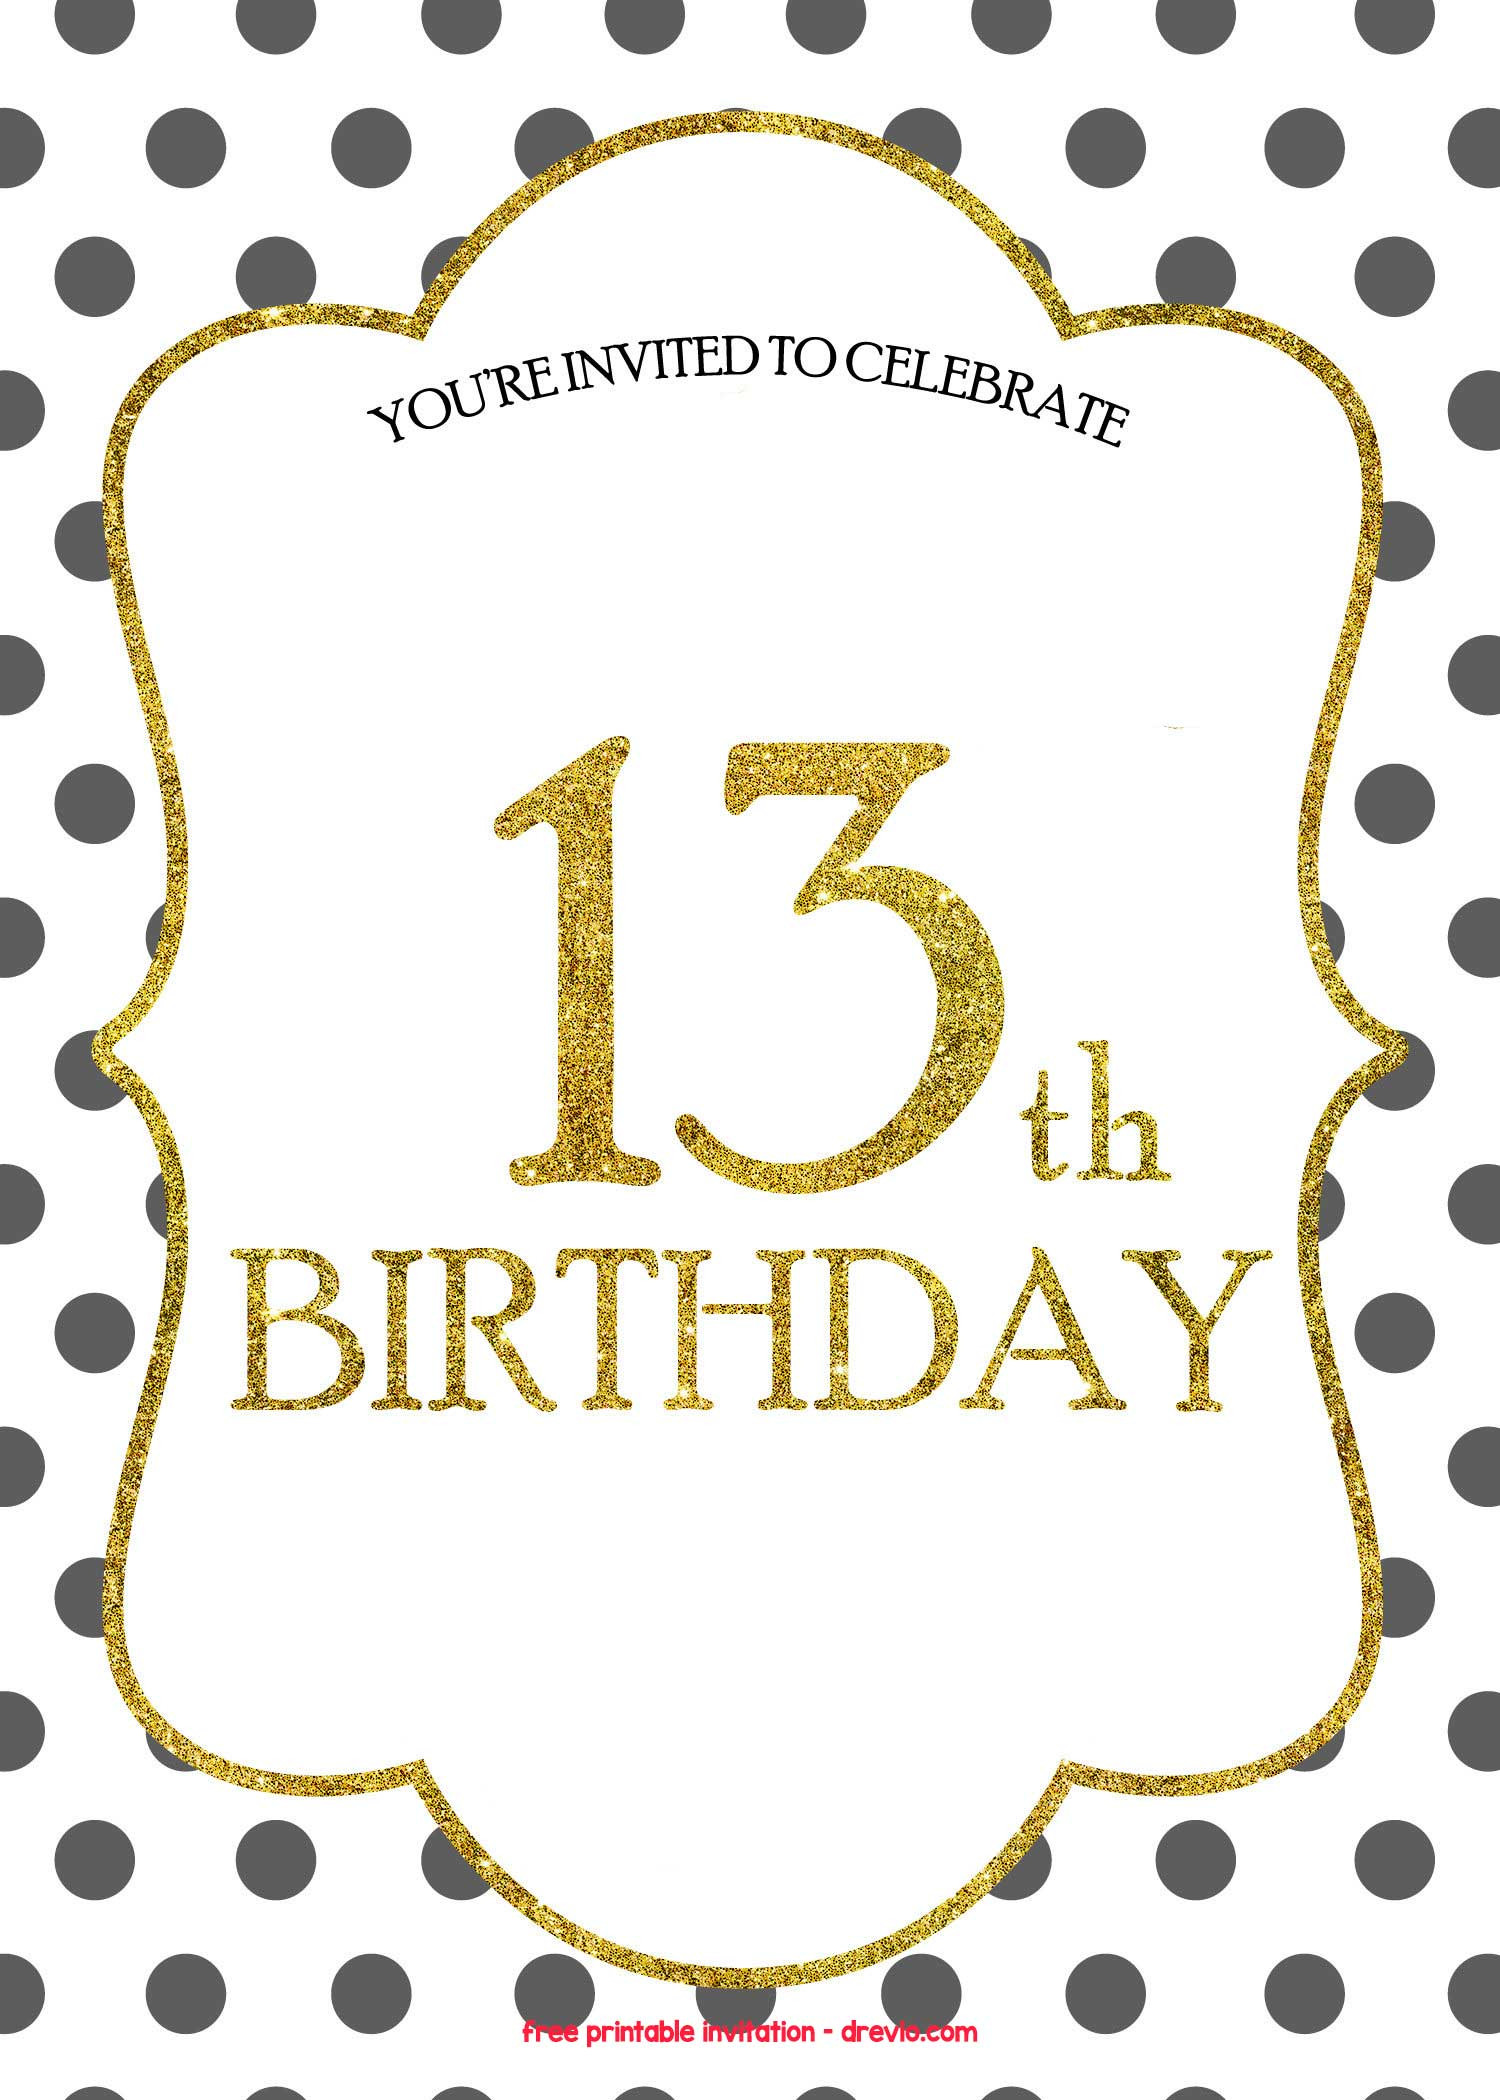 Birthday Invitation Template Free
 FREE 13th Birthday Invitations Templates – FREE PRINTABLE